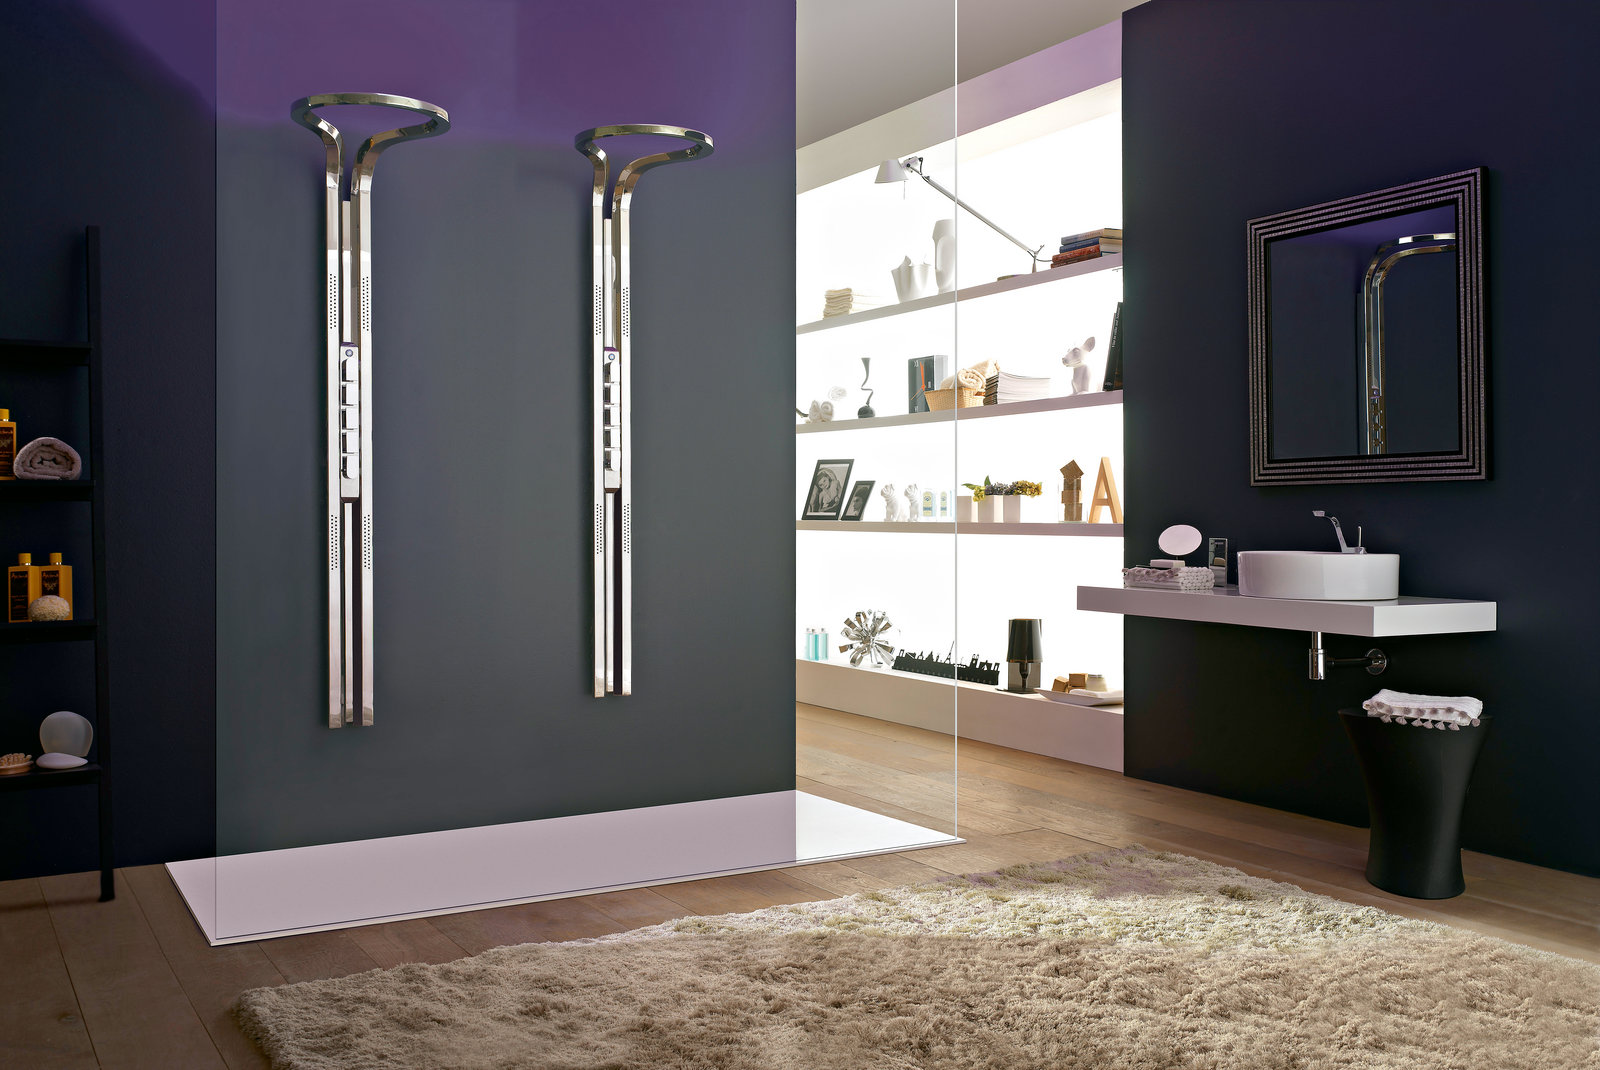 Modern Showerhead Design 3Modern shower head design - GRAFF Contemporary Bathroom Designs unique rain shower or waterfall shower head